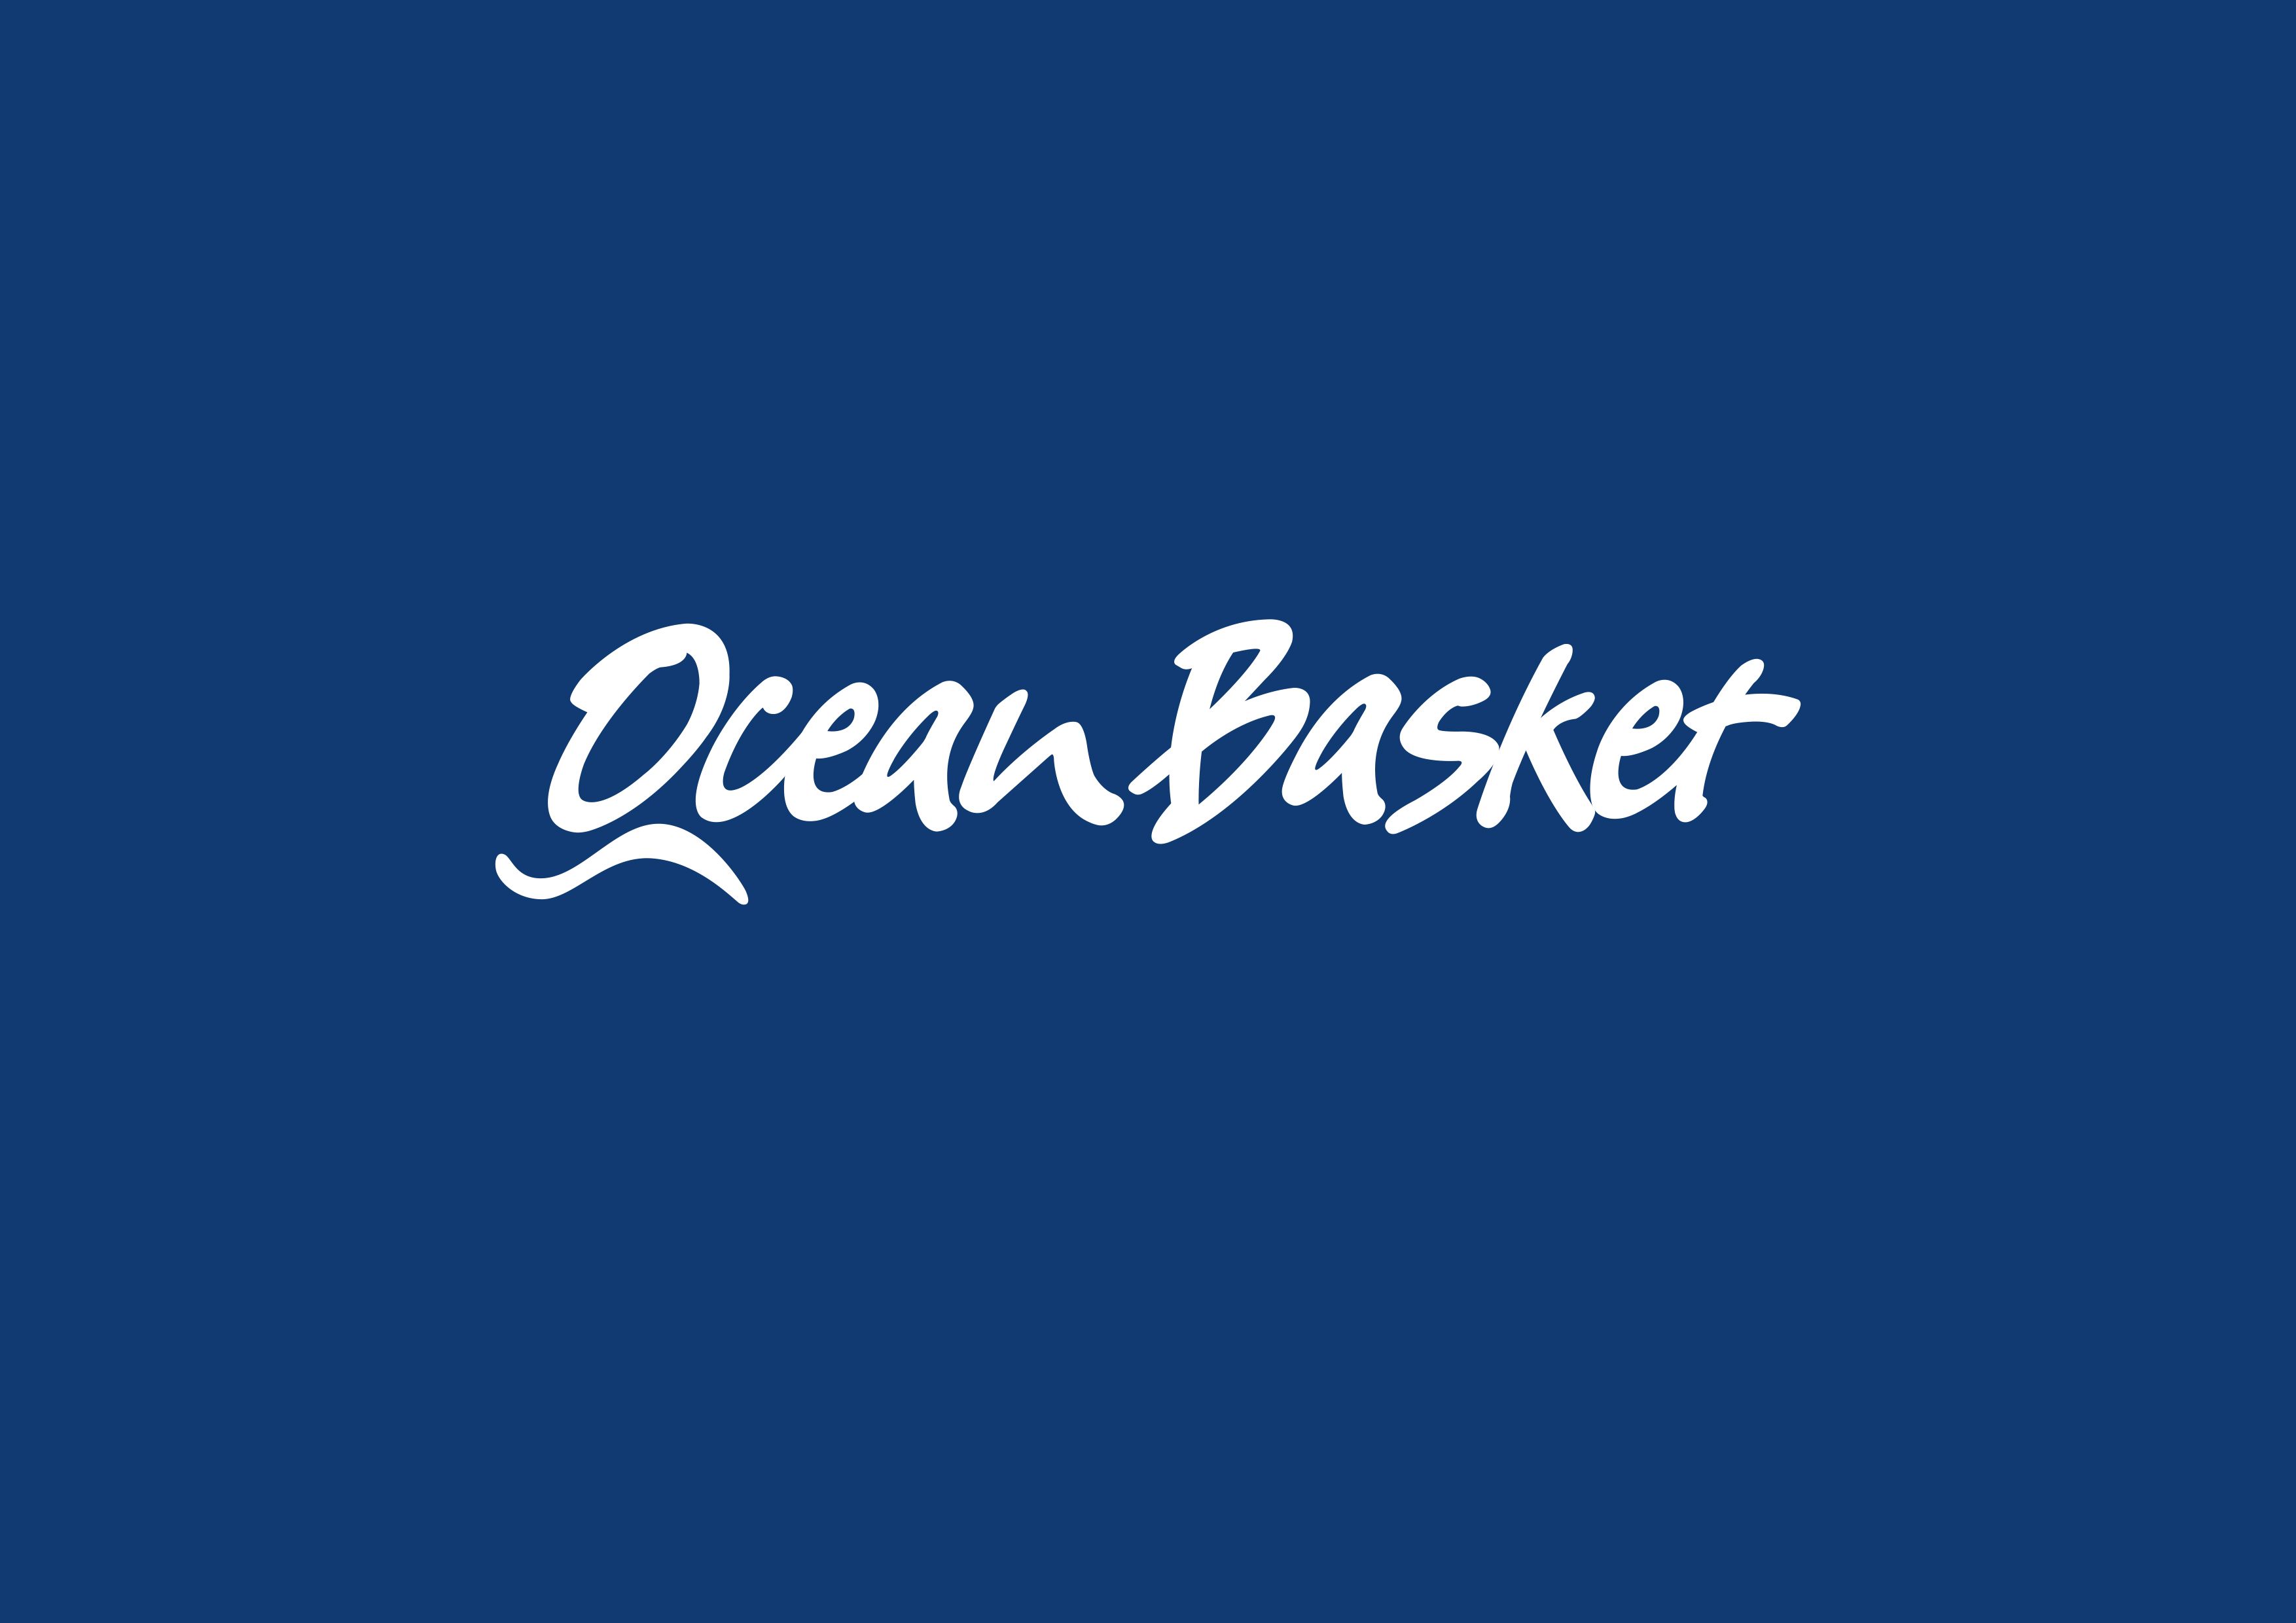 Ocean-Basket-Logo-without-bottle-cap-BLUE.jpg